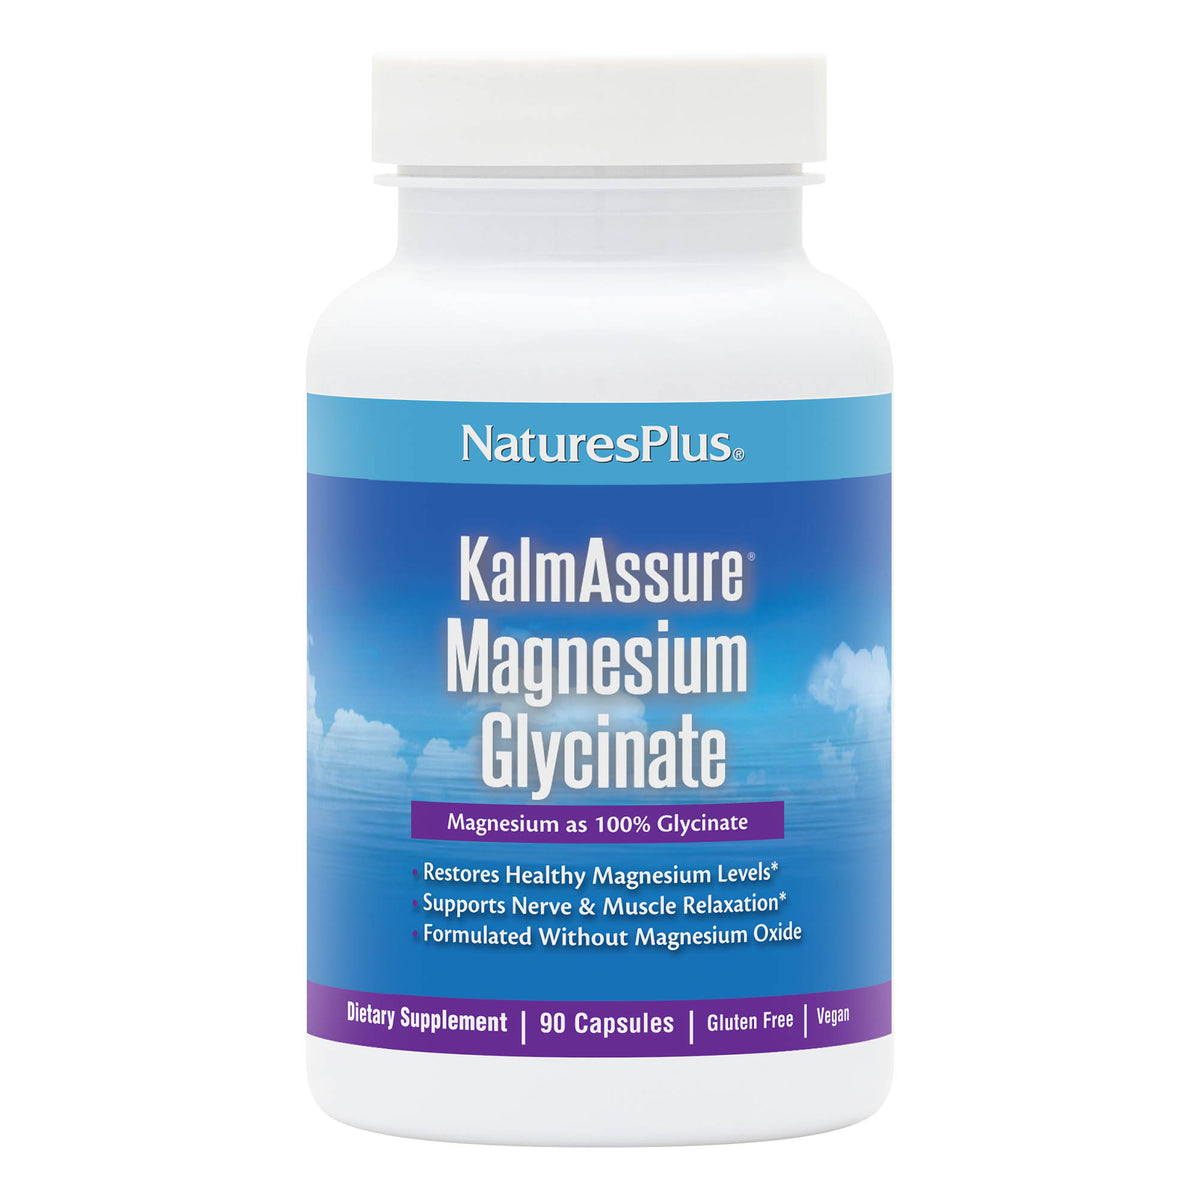 product image of KalmAssure® Magnesium Glycinate Capsules containing 90 Count